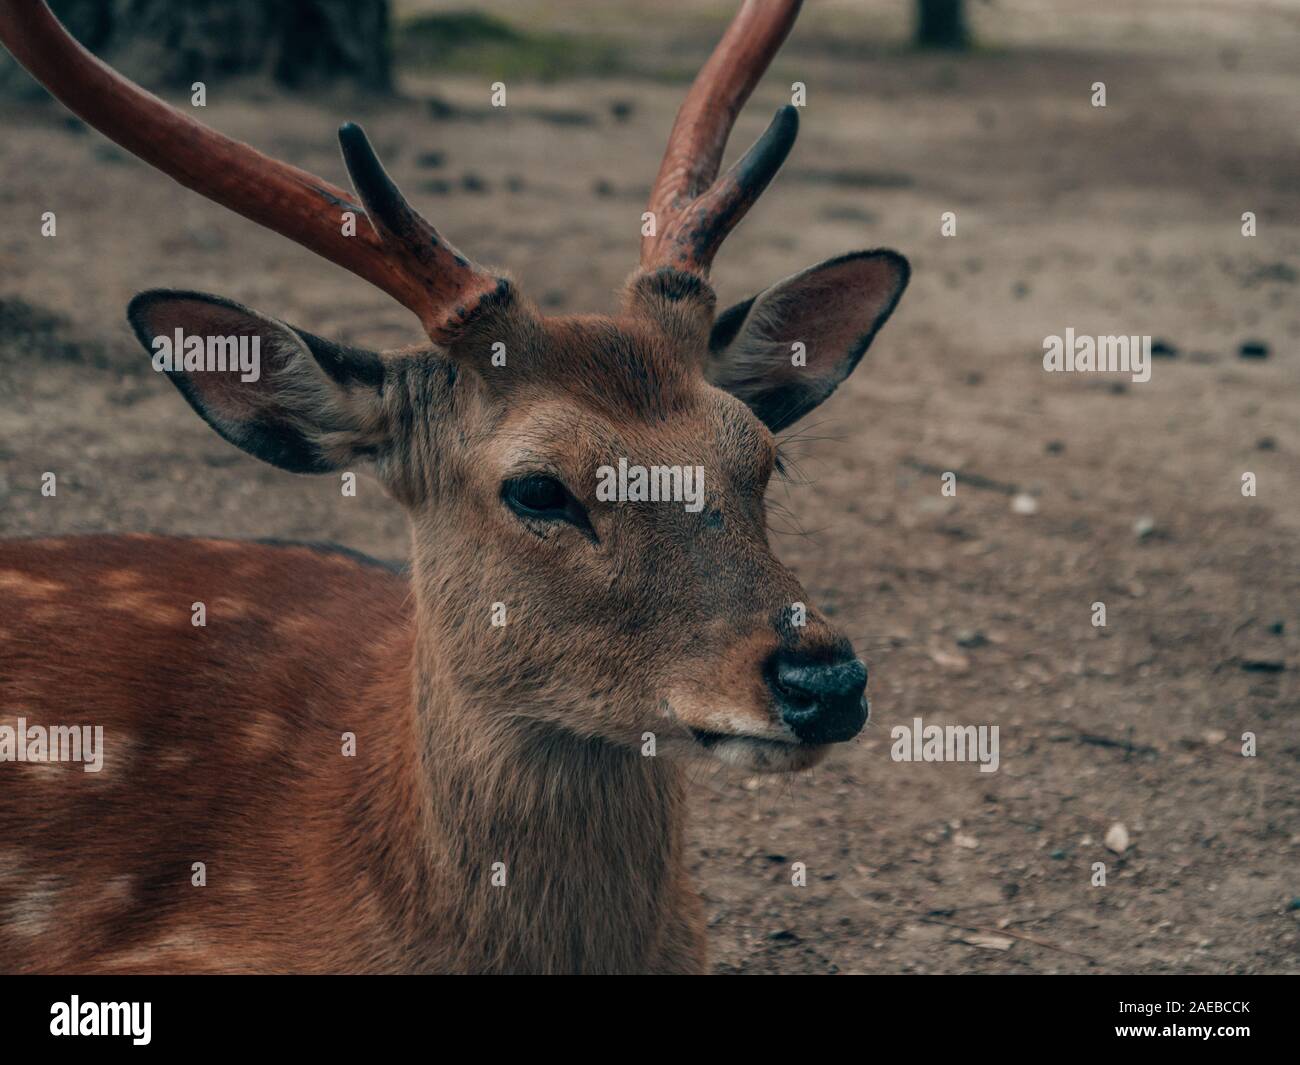 a kyoto deer in nara park Stock Photo